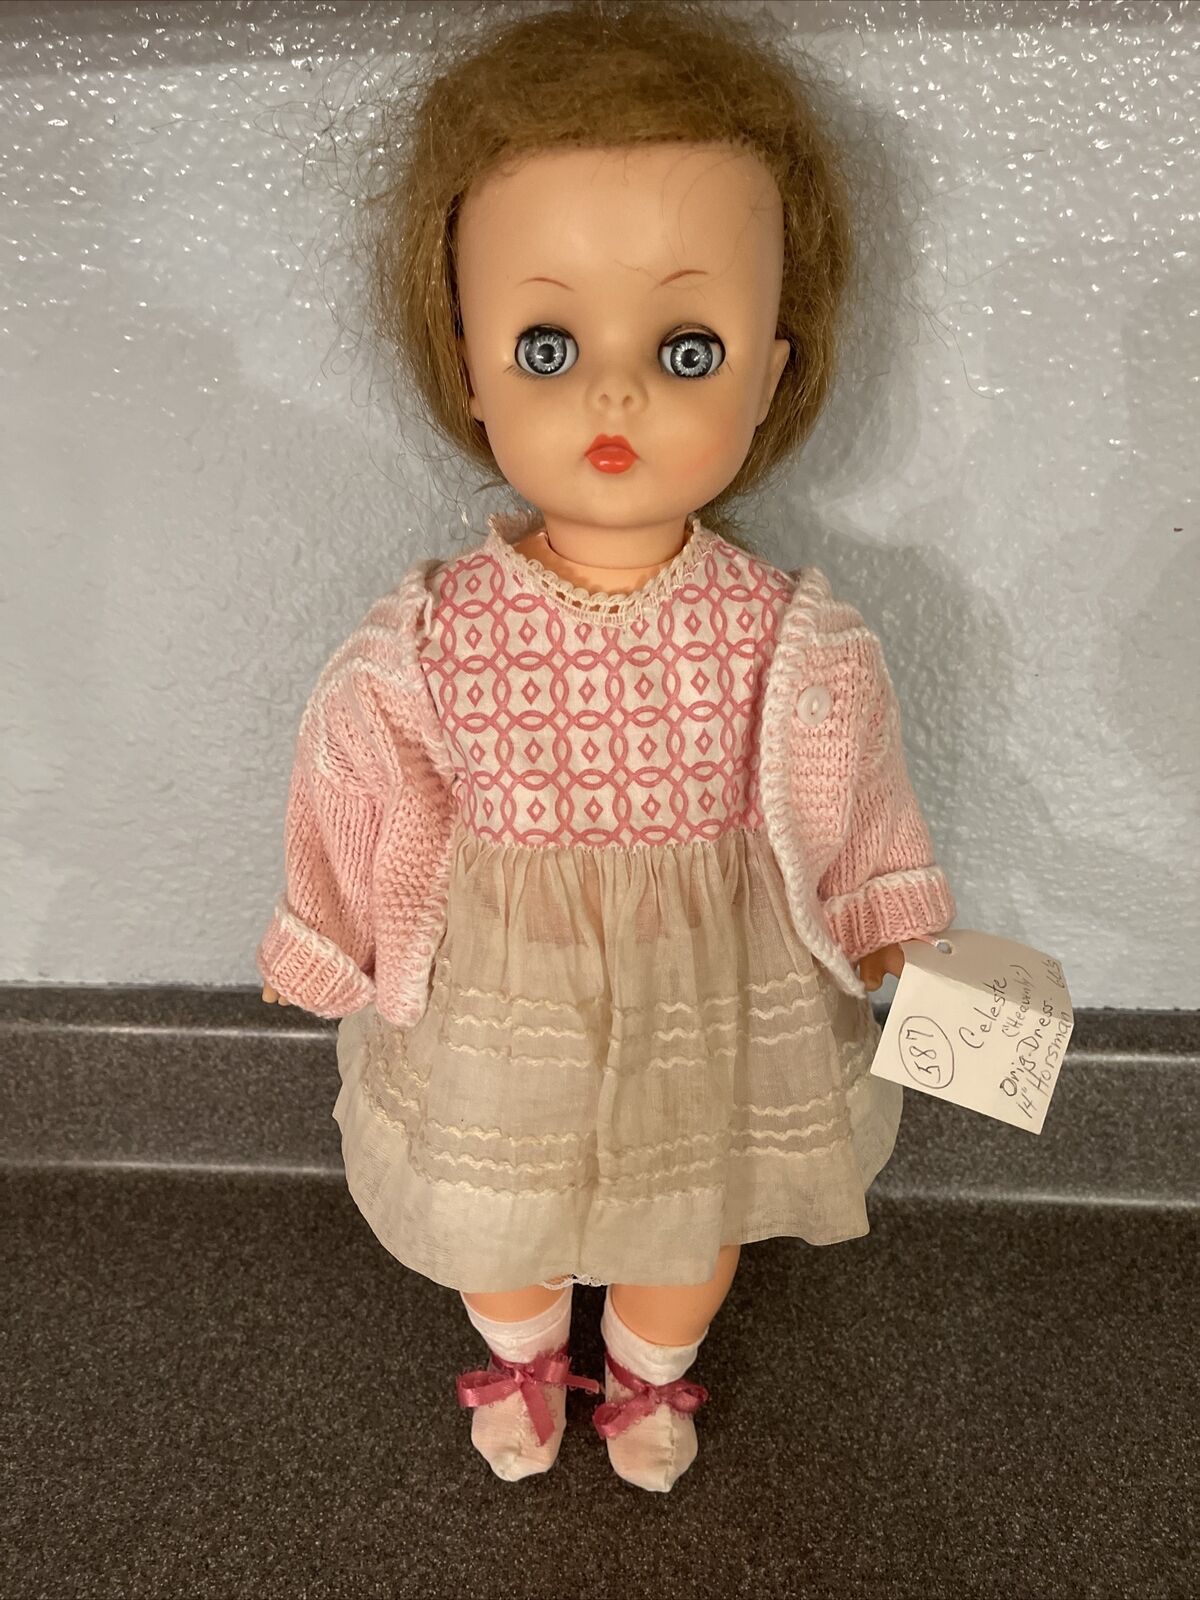 Heavenly Horsman 15” Doll 1960’s Original Dress